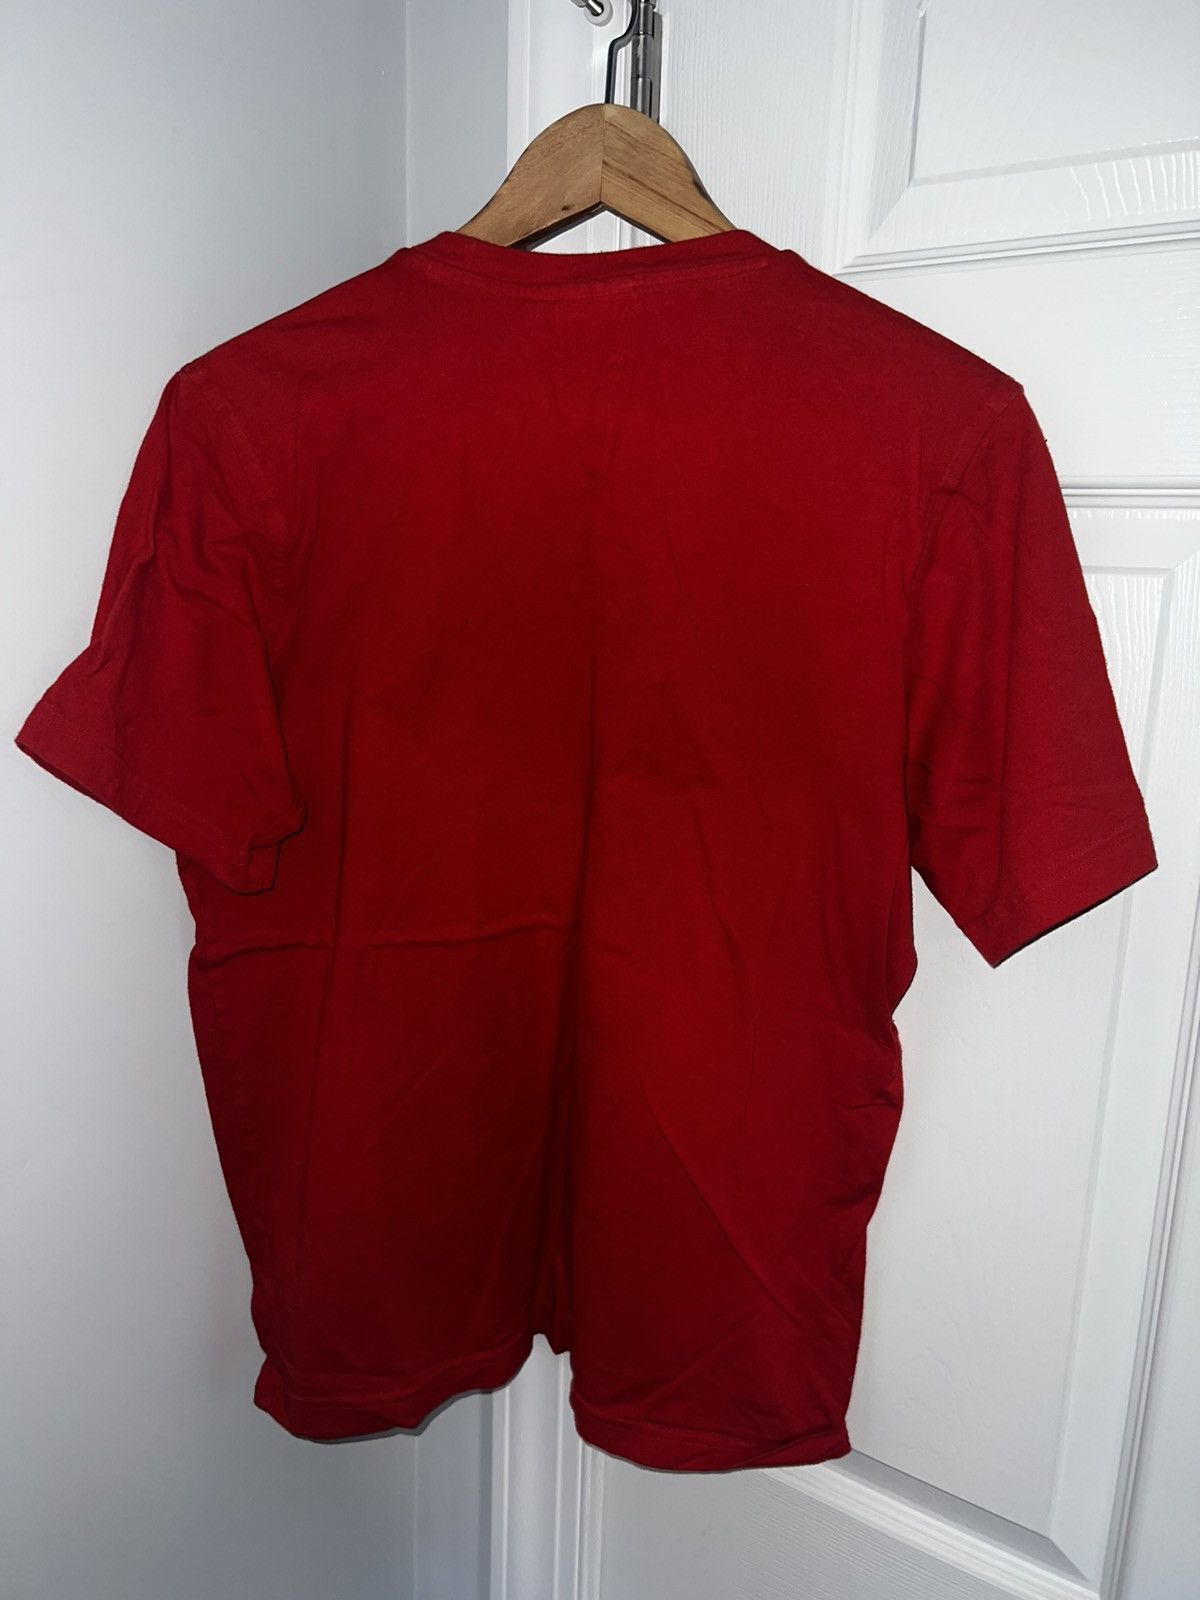 Adidas Red adidas logo T- Shirt Size US M / EU 48-50 / 2 - 3 Thumbnail